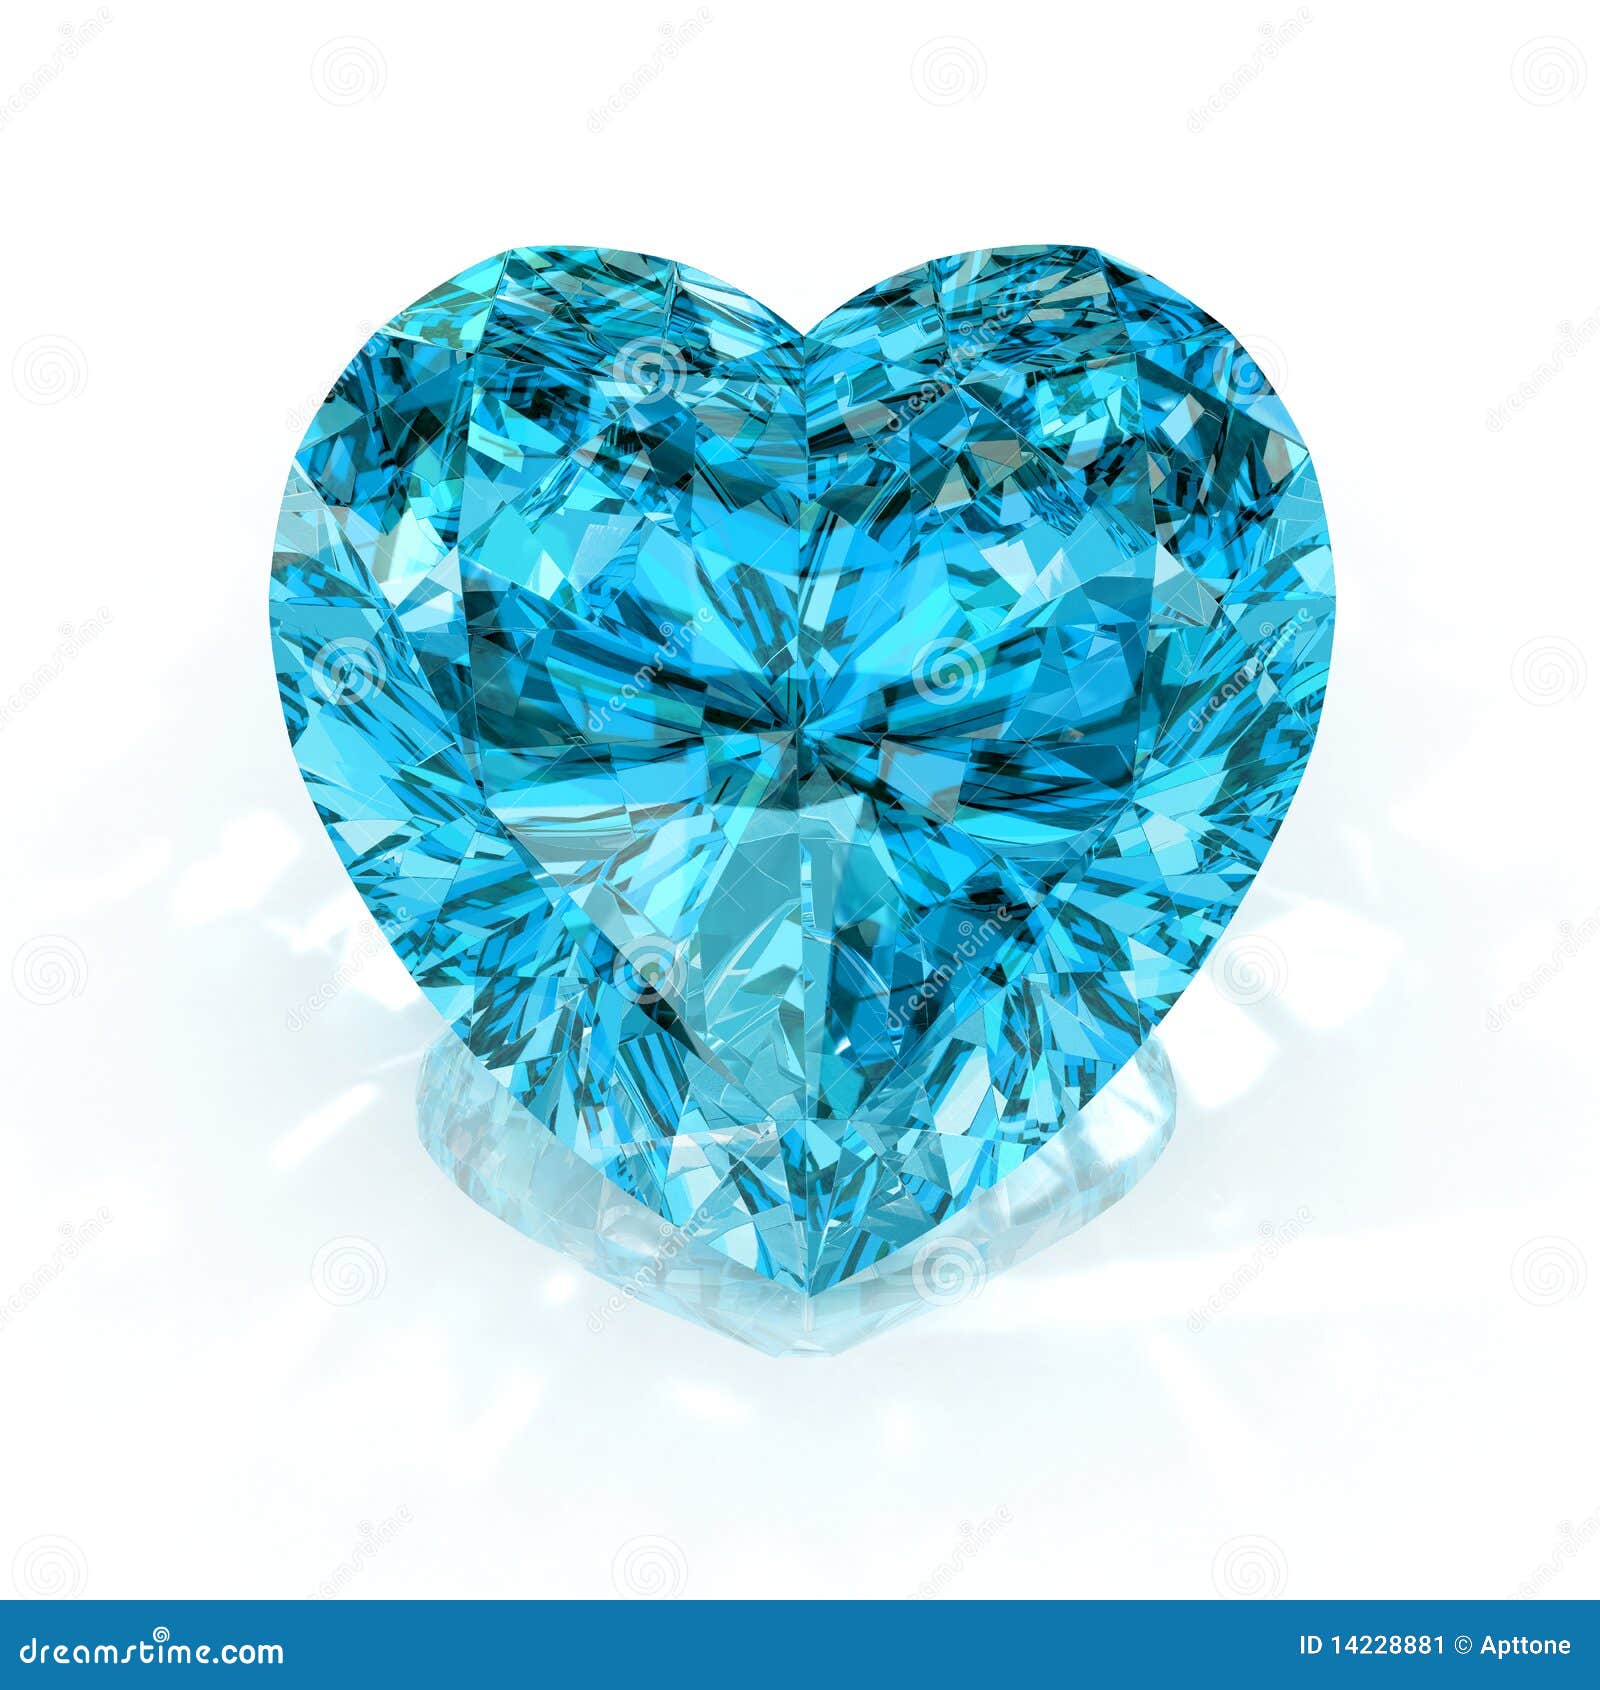 heart-shape-diamond-14228881.jpg